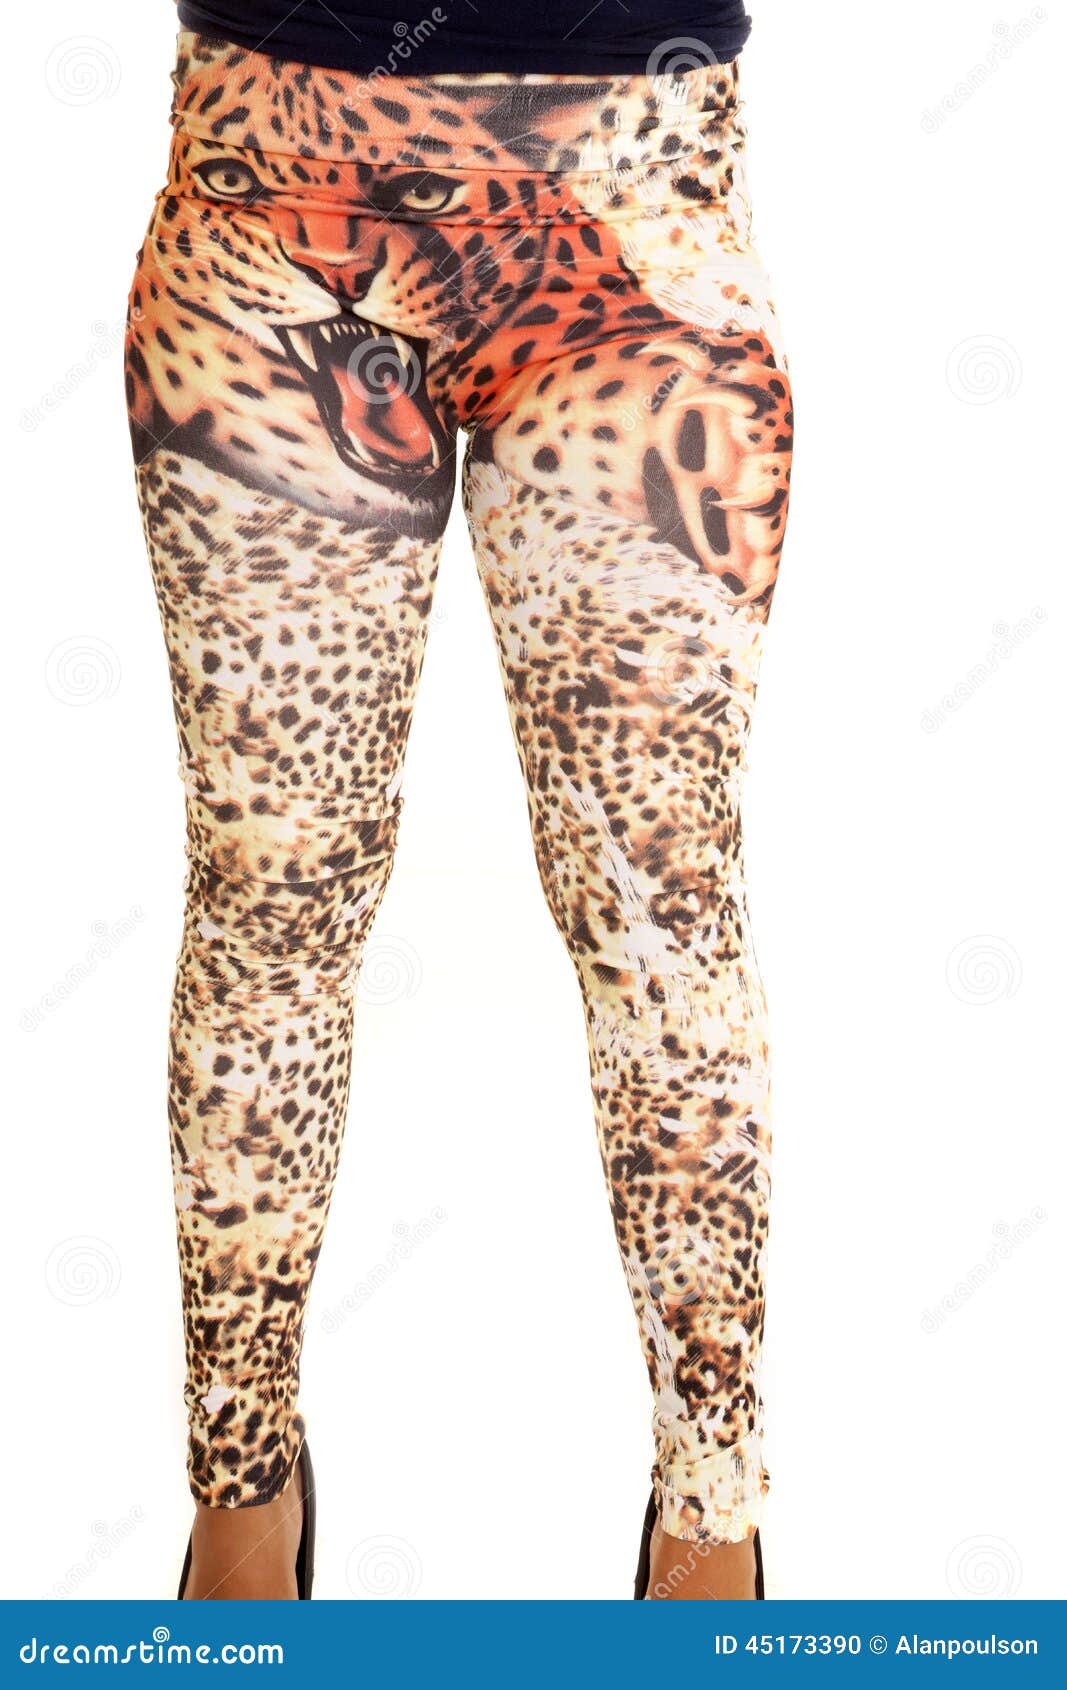 https://thumbs.dreamstime.com/z/tiger-print-leggings-woman-her-printed-picture-45173390.jpg